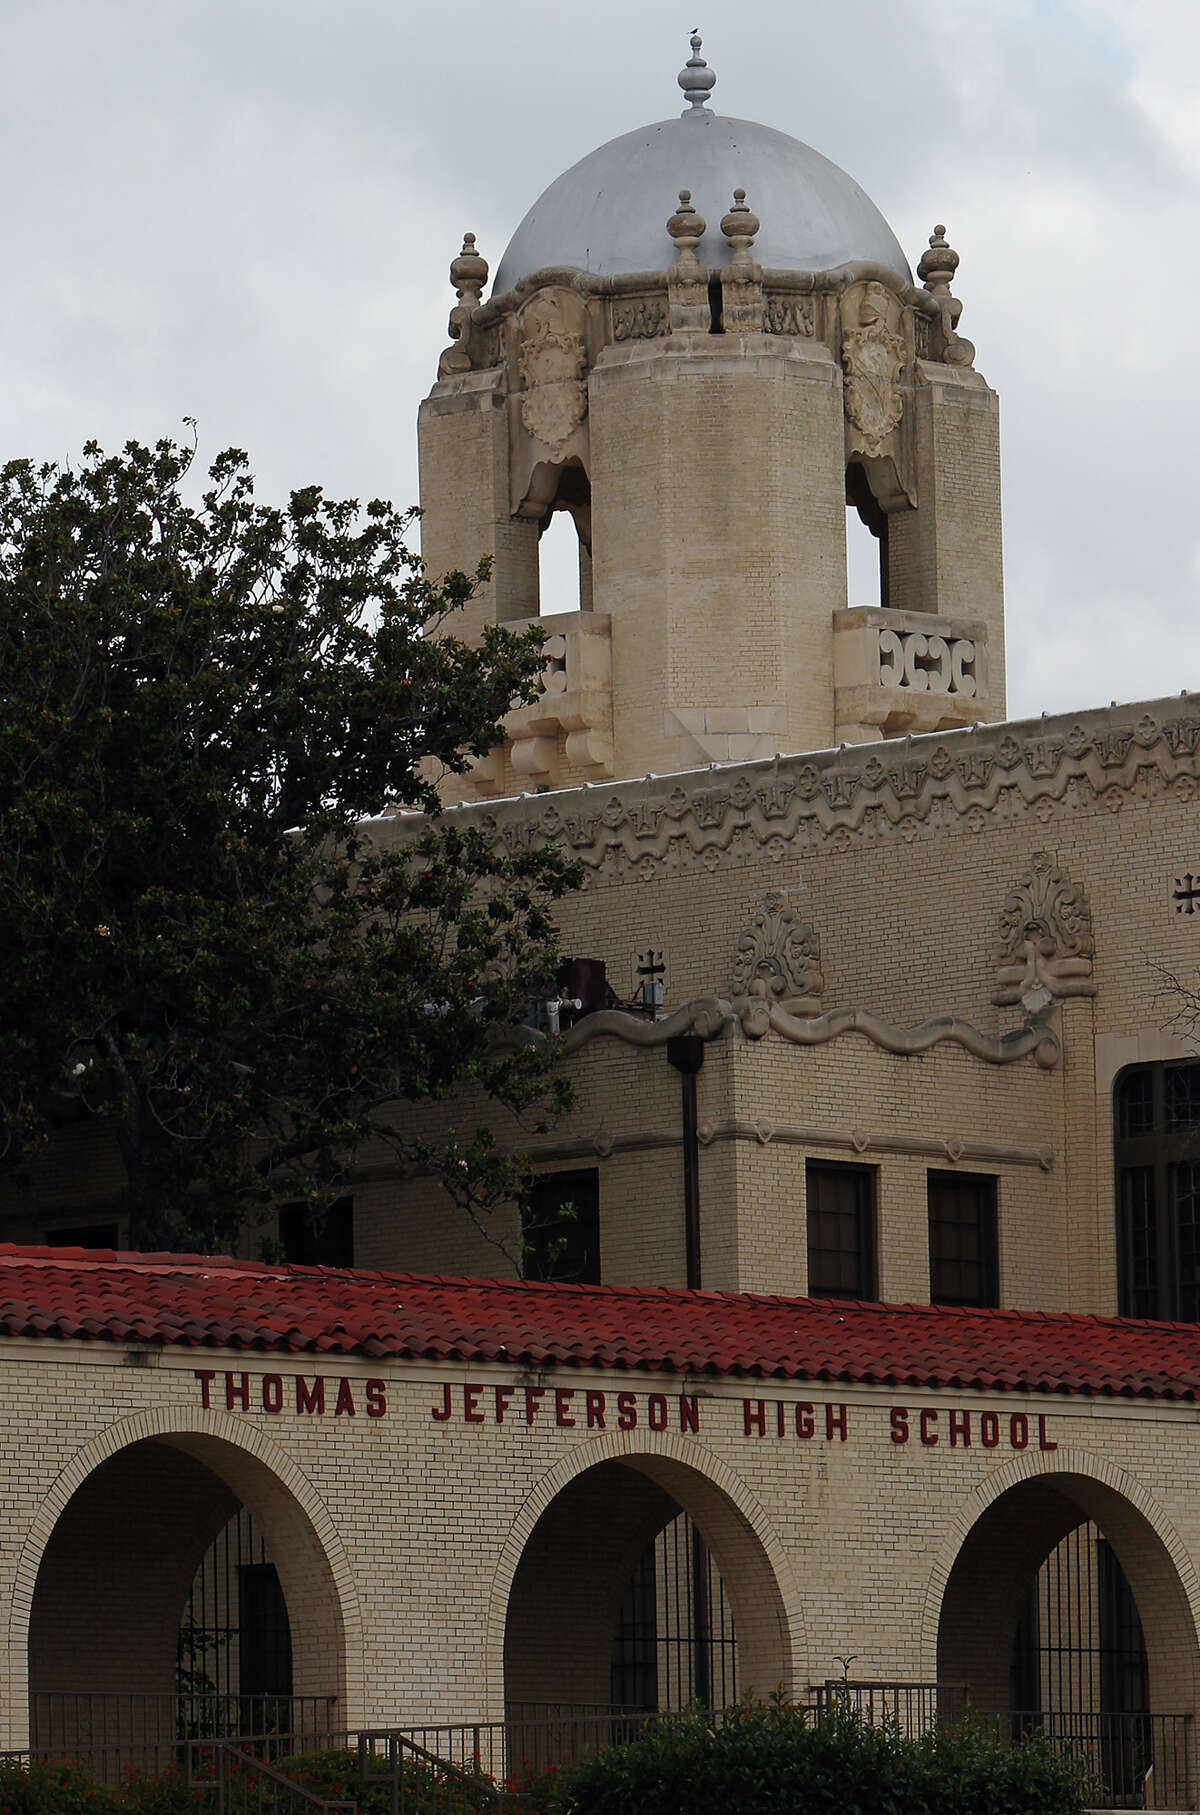 Images of Jefferson High School for Cityscape on Thursday, June 21, 2012.